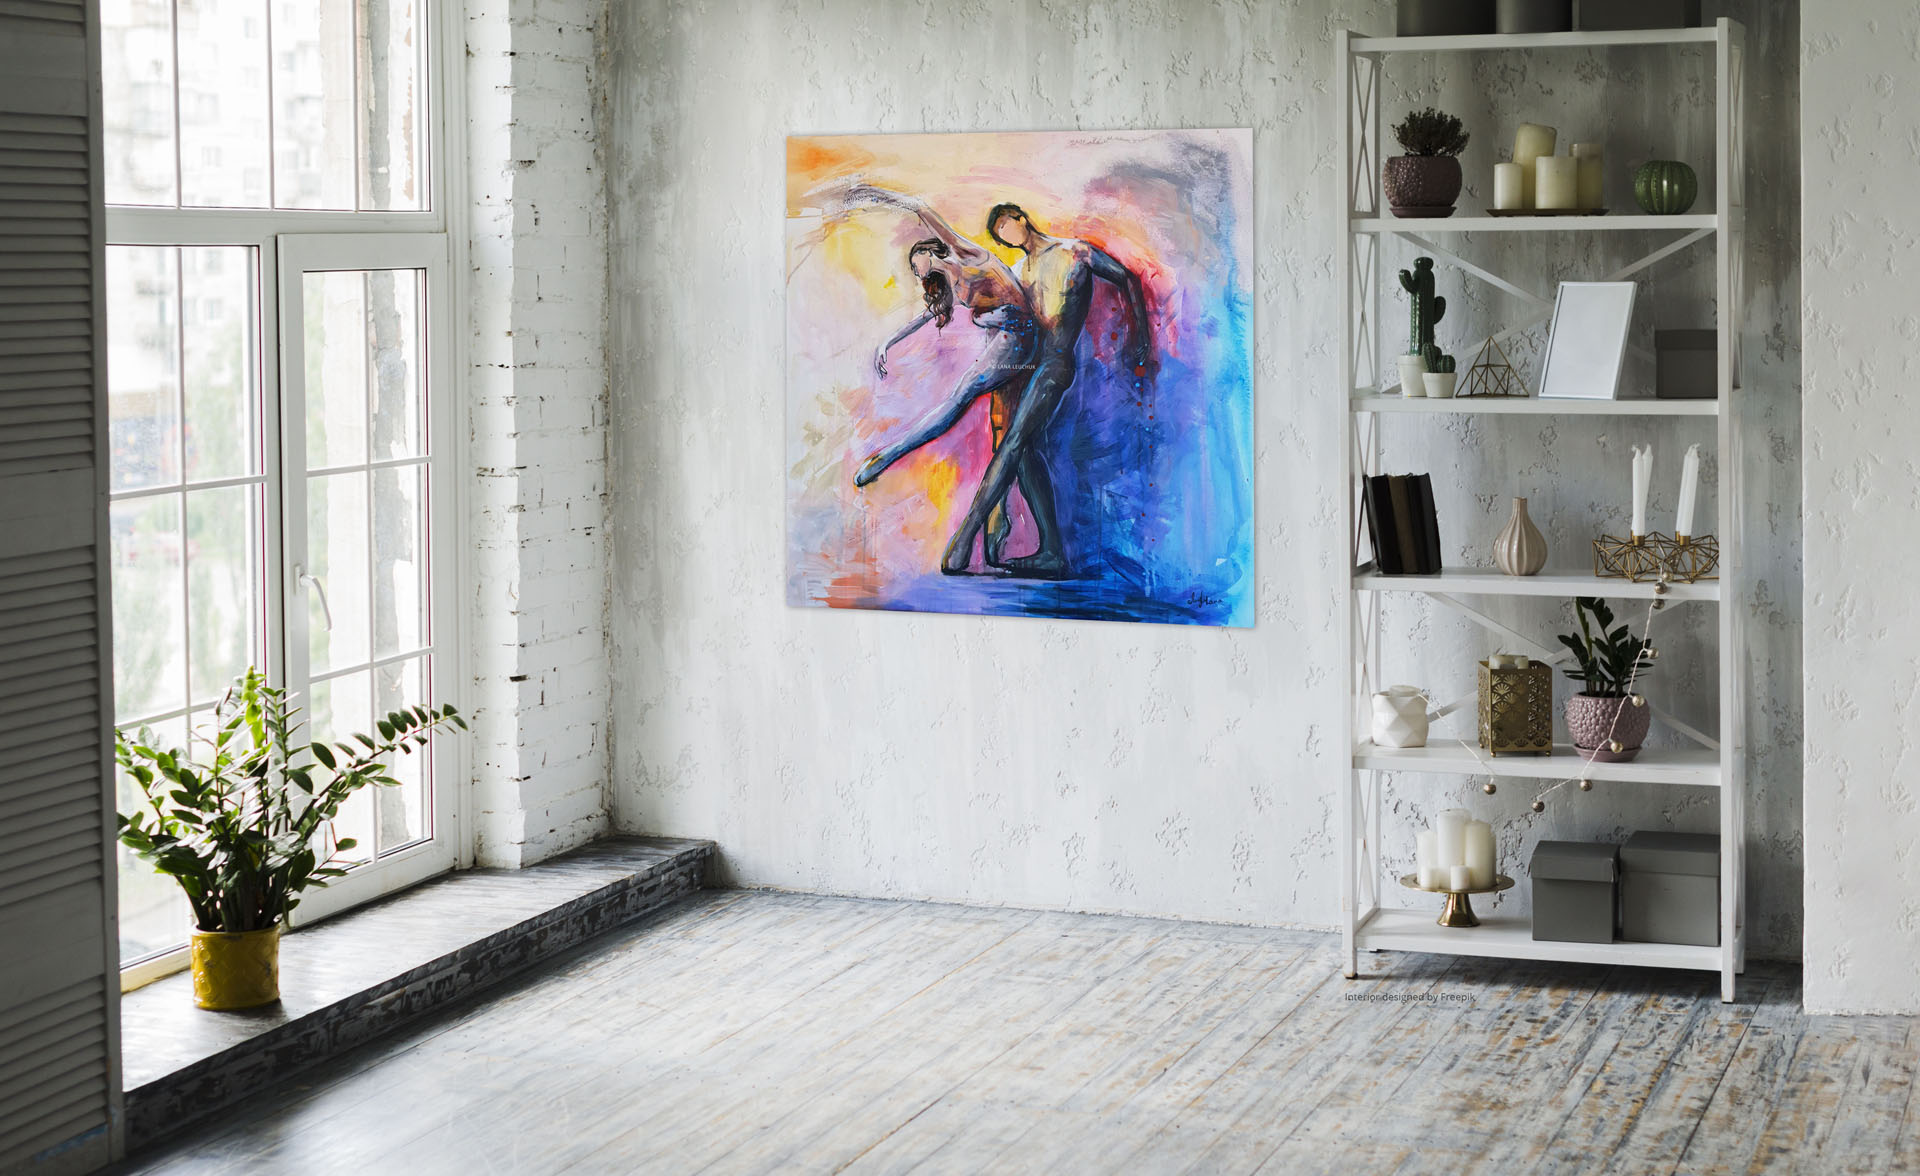 artwork-in-interior-Dancing with a stranger-by-Lana Leuchuk-sm